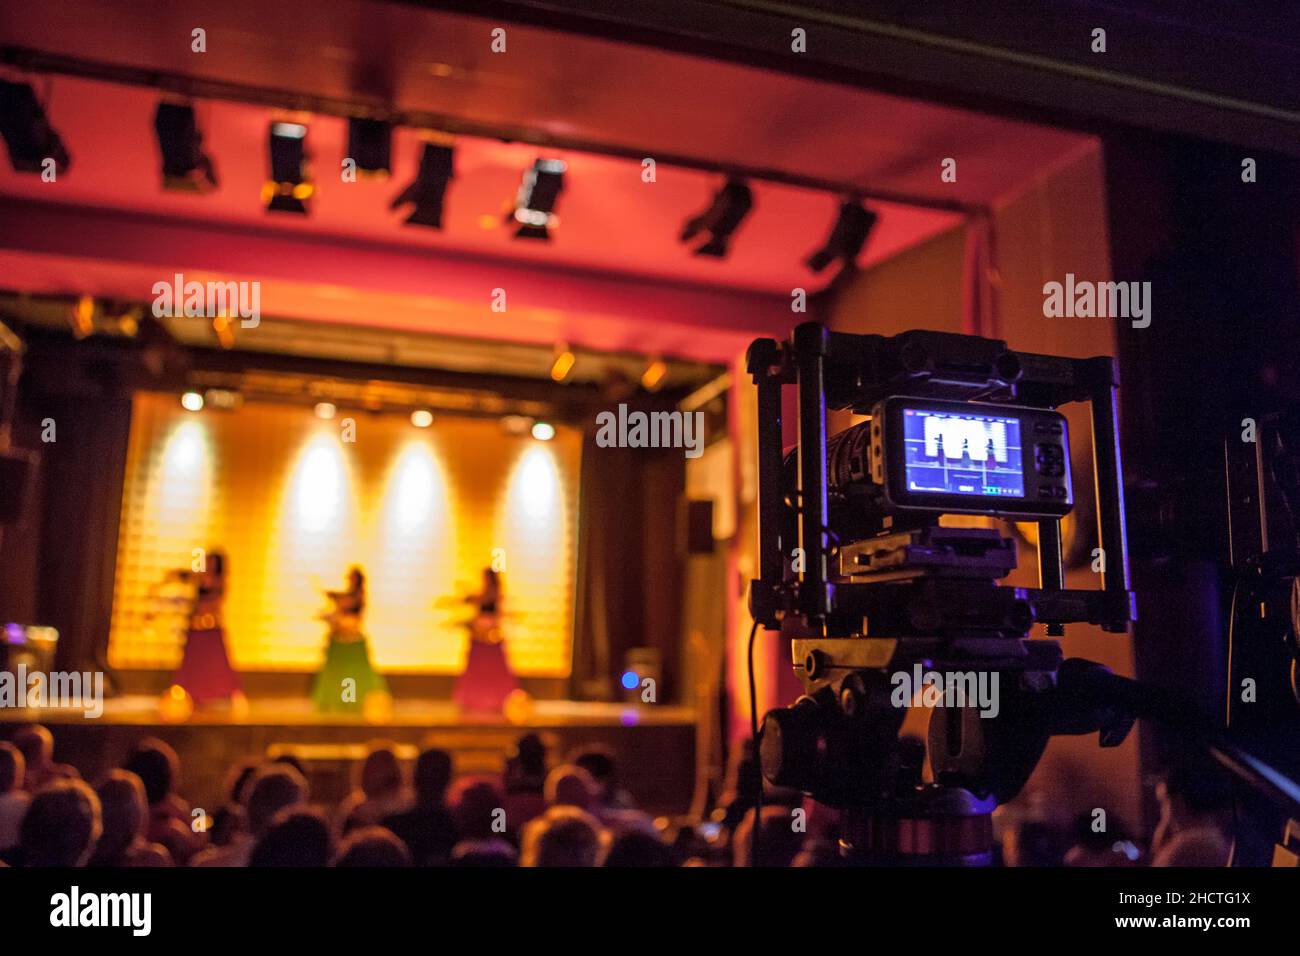 Digital video camera recording dance show. Warm ambience Stock Photo